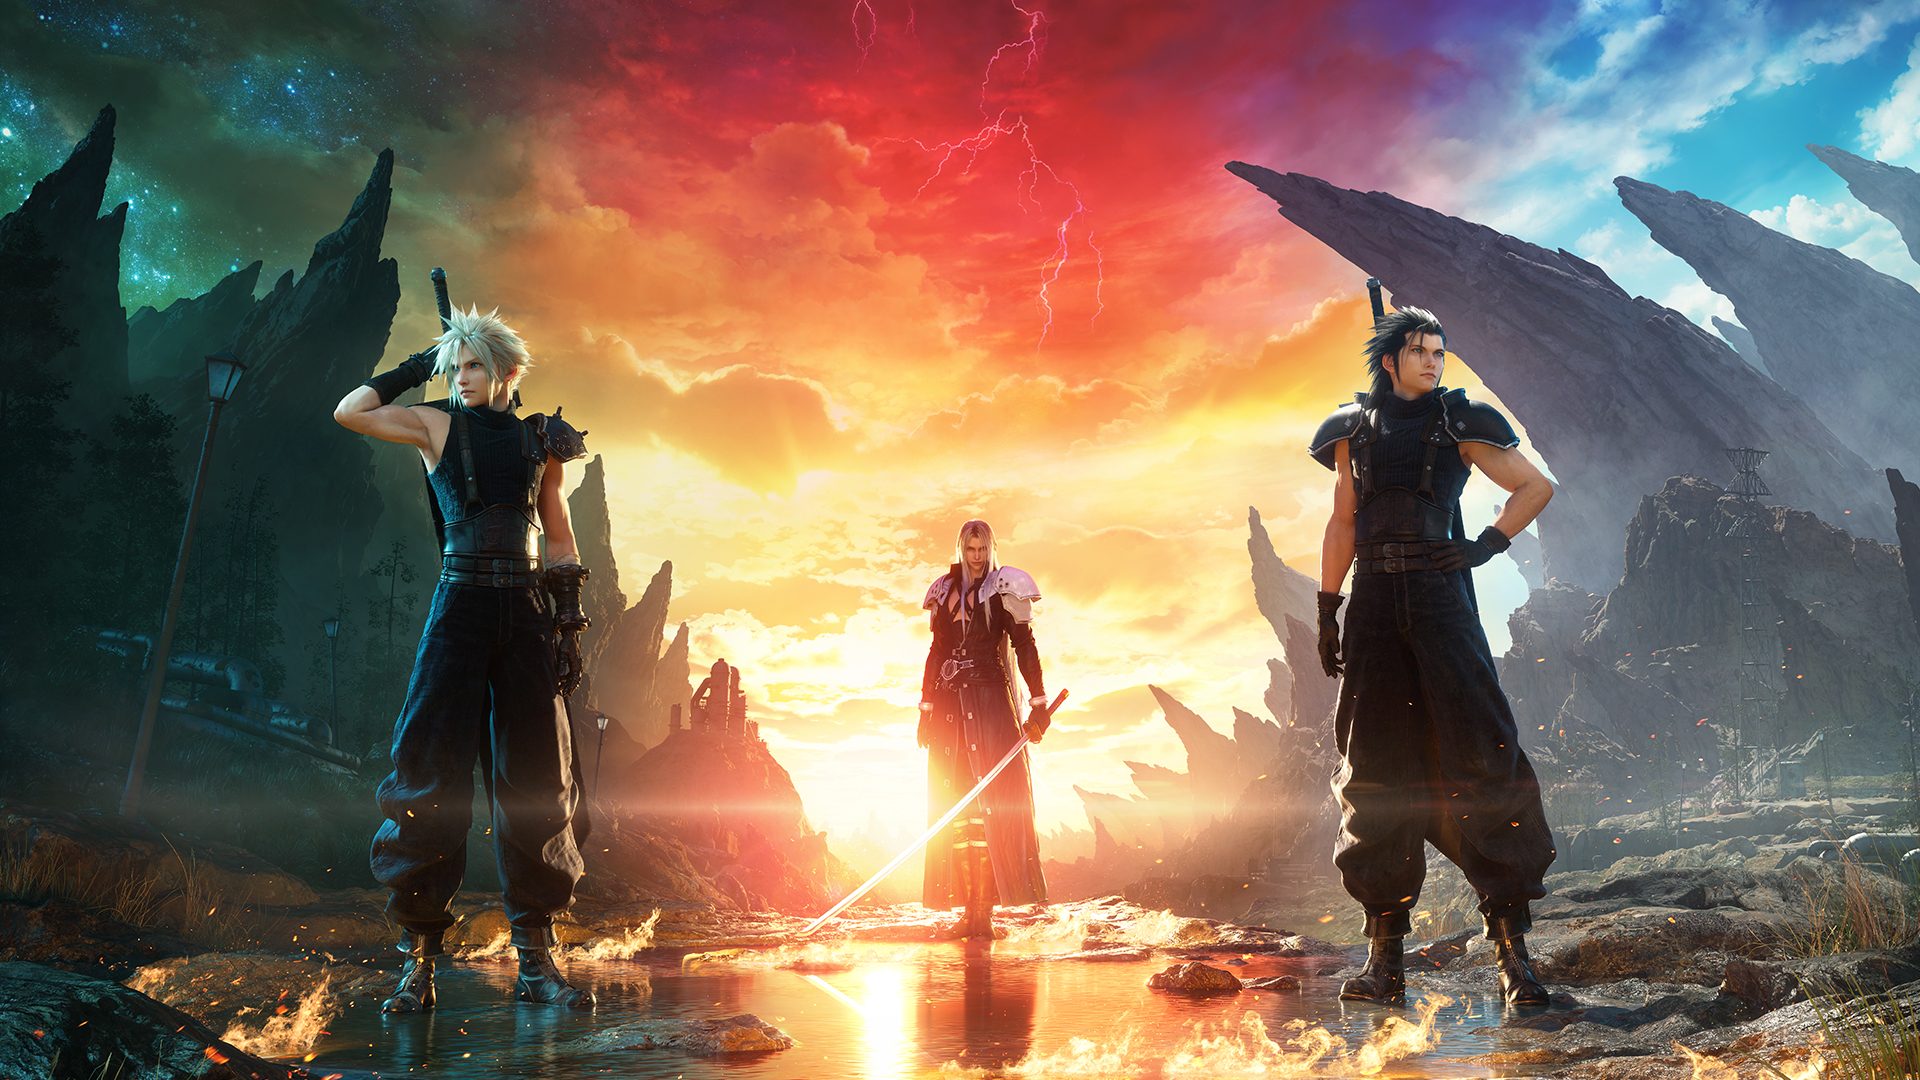 Sekiro Final Fantasy VII Remake Mod Allows You to Play as Cloud